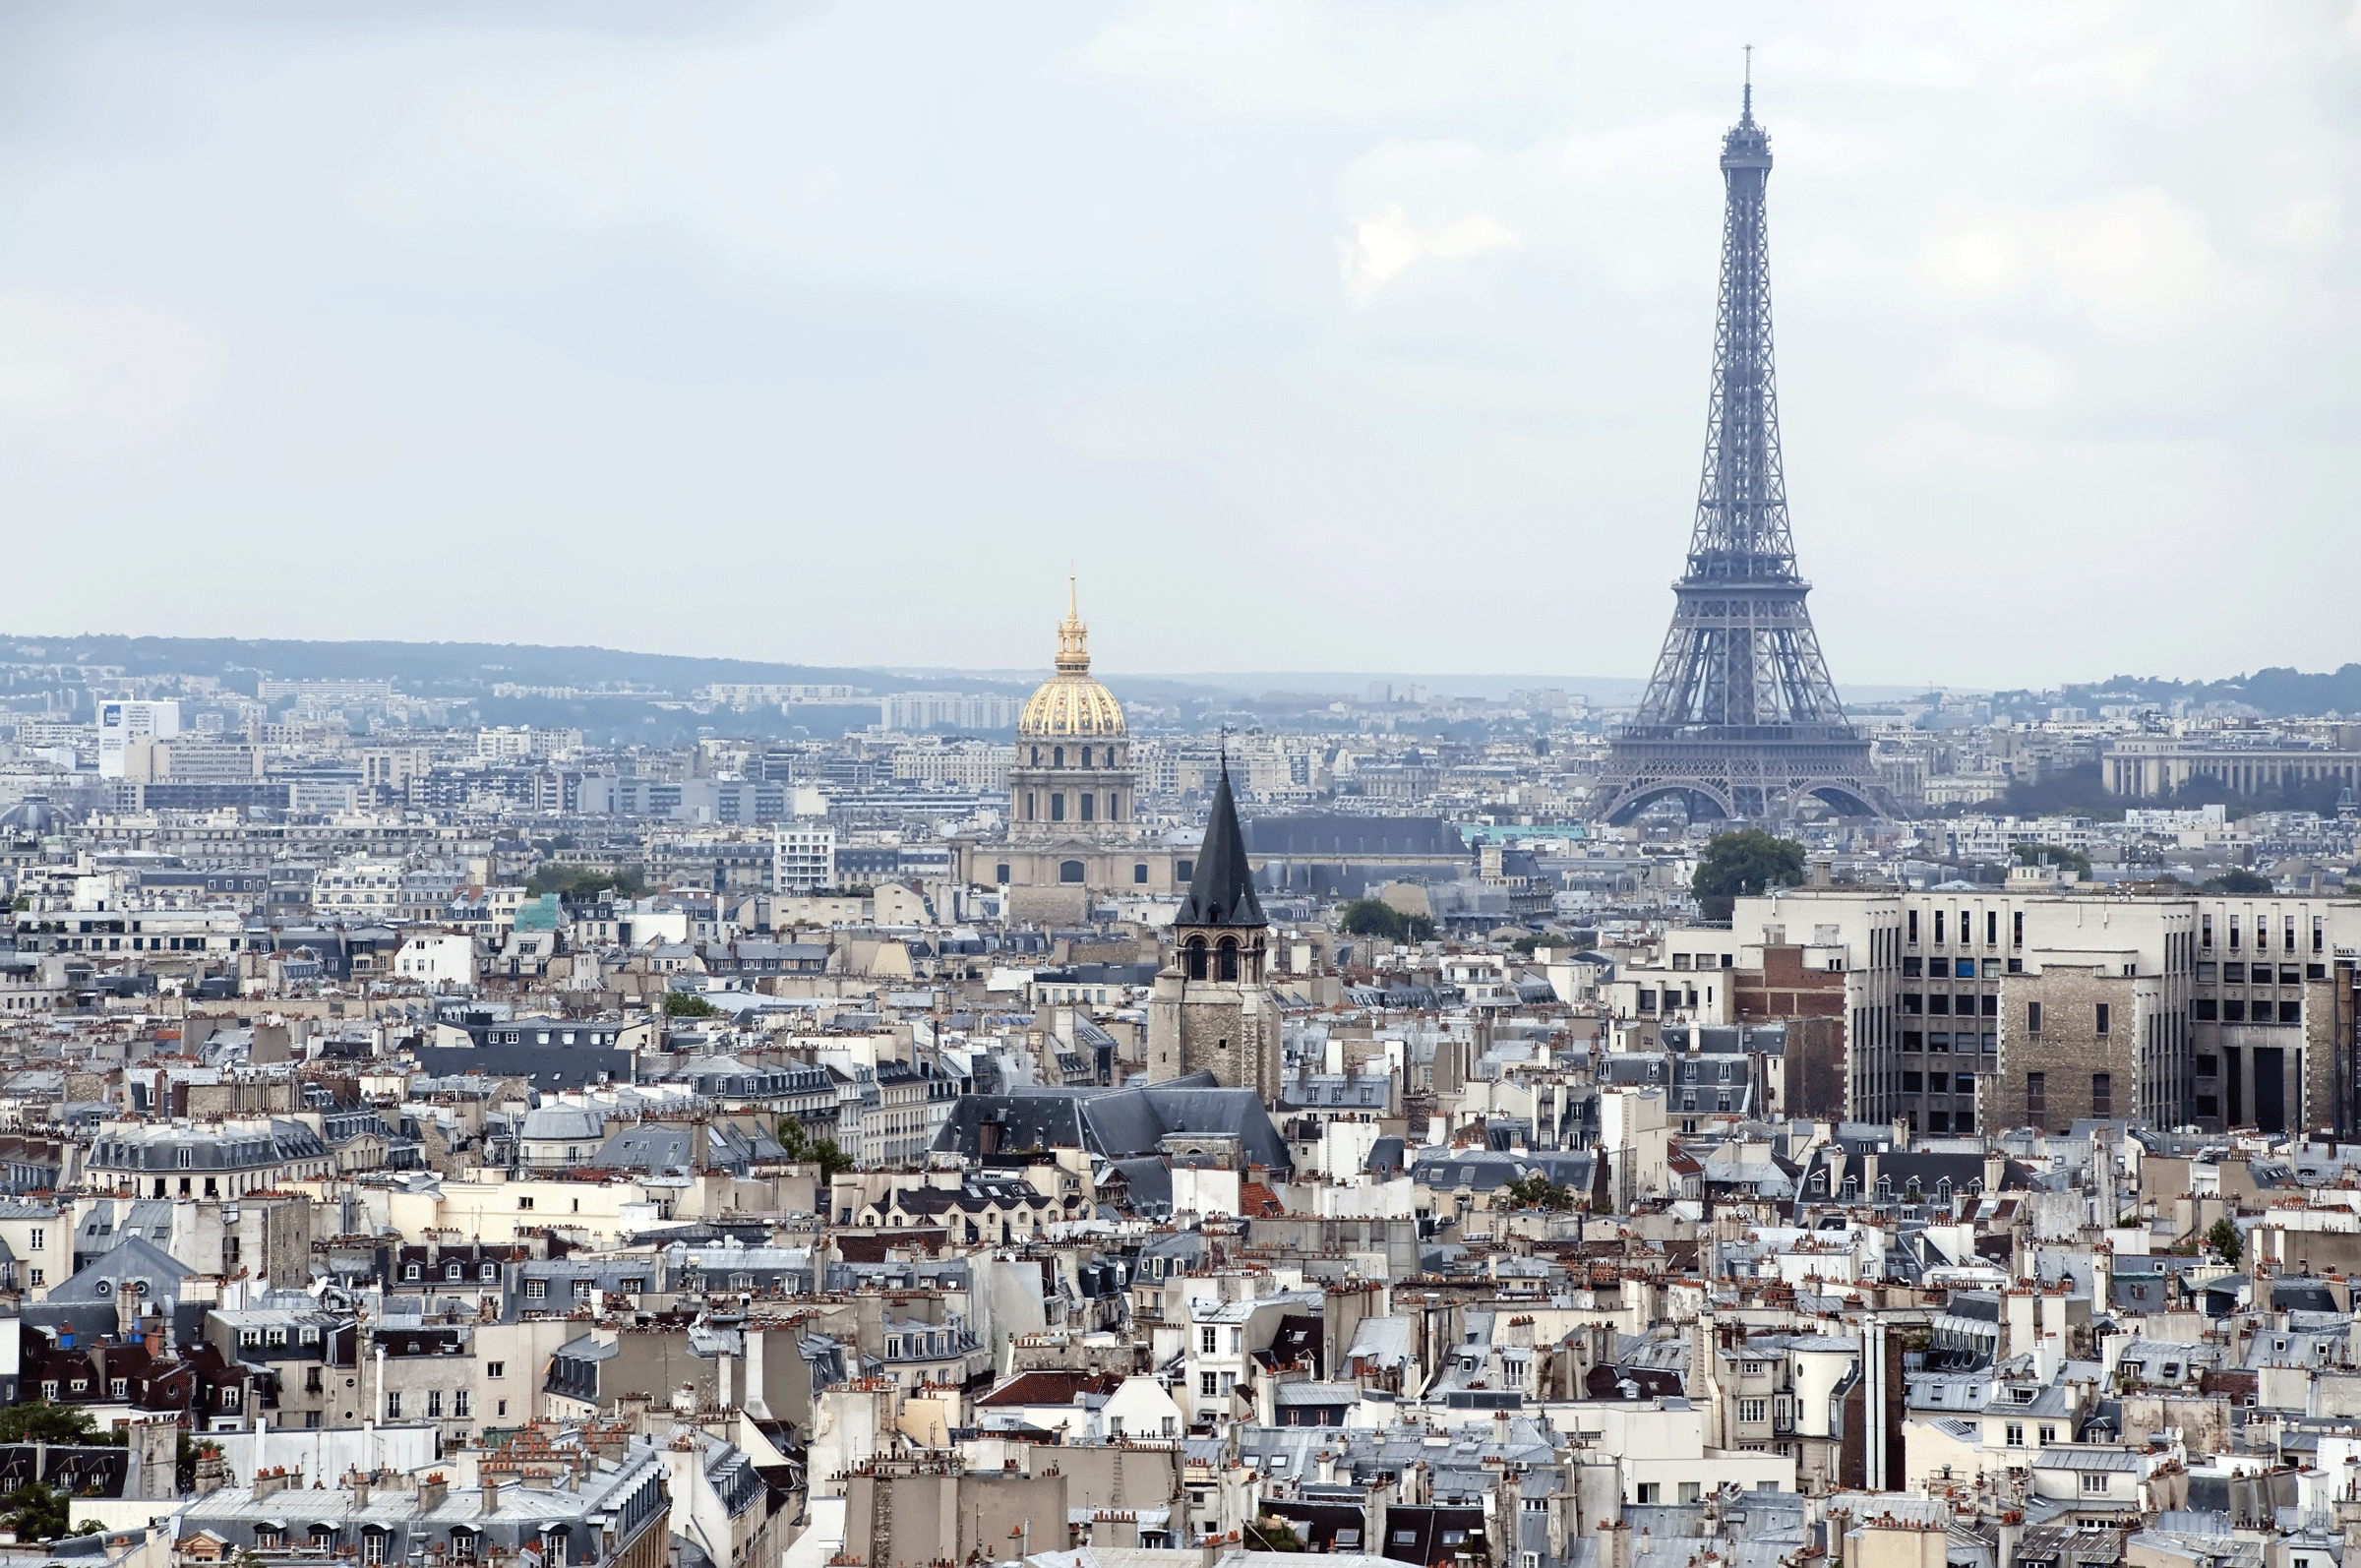 paris skyline - Google Search | Pablo | Pinterest | Paris skyline